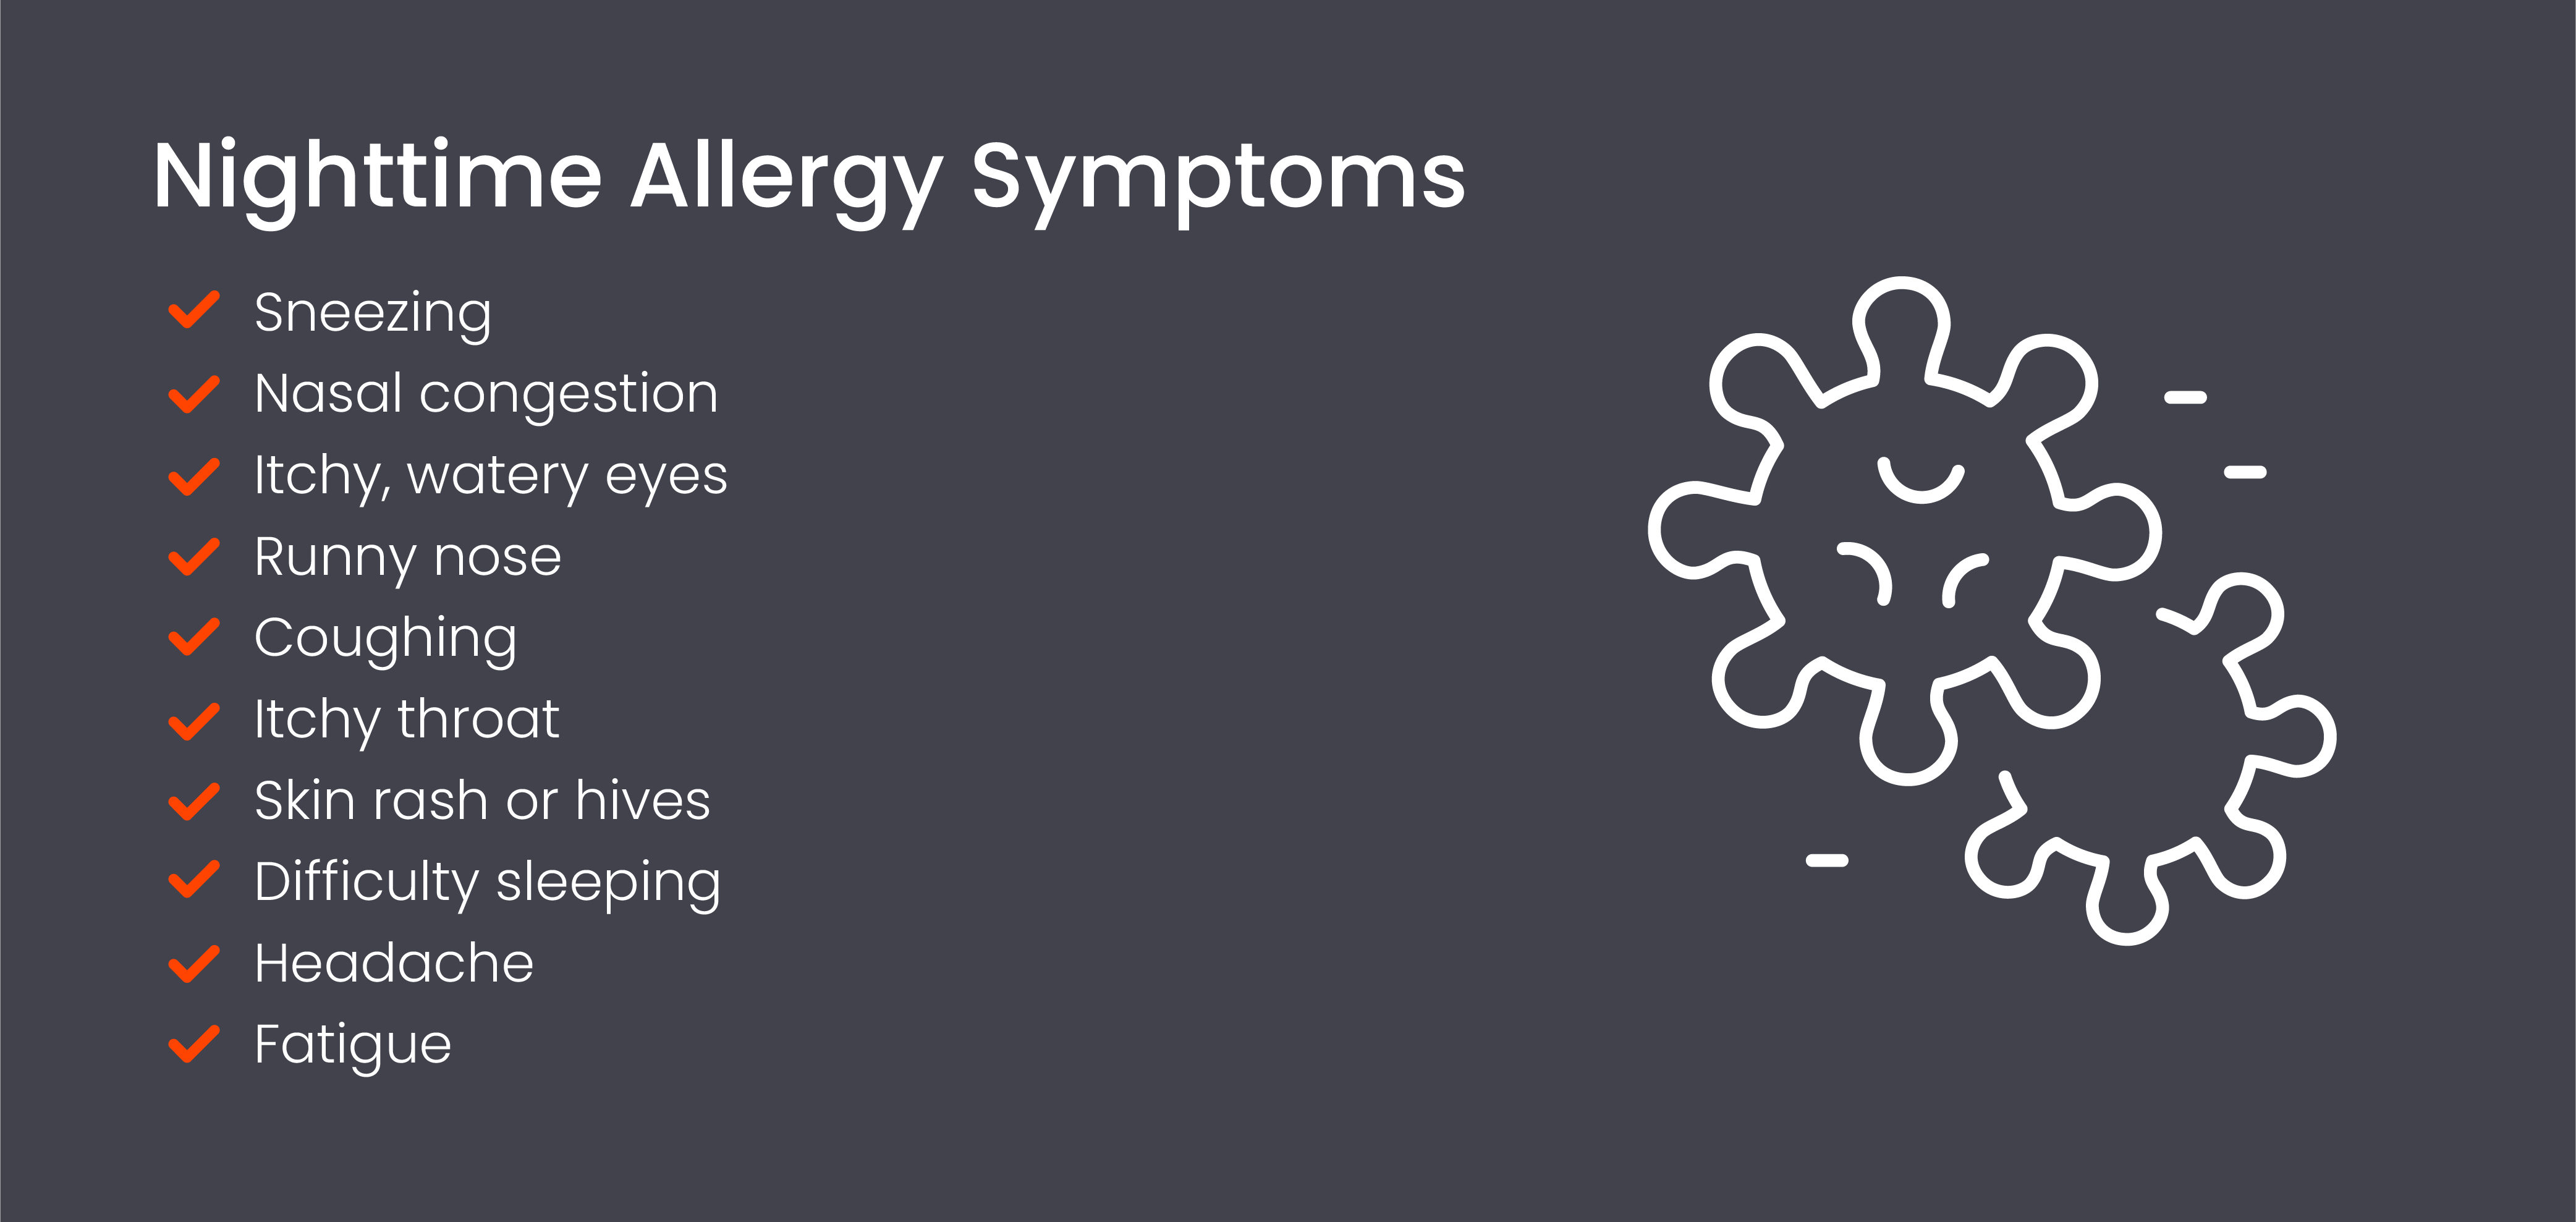 Nighttime allergy symptoms